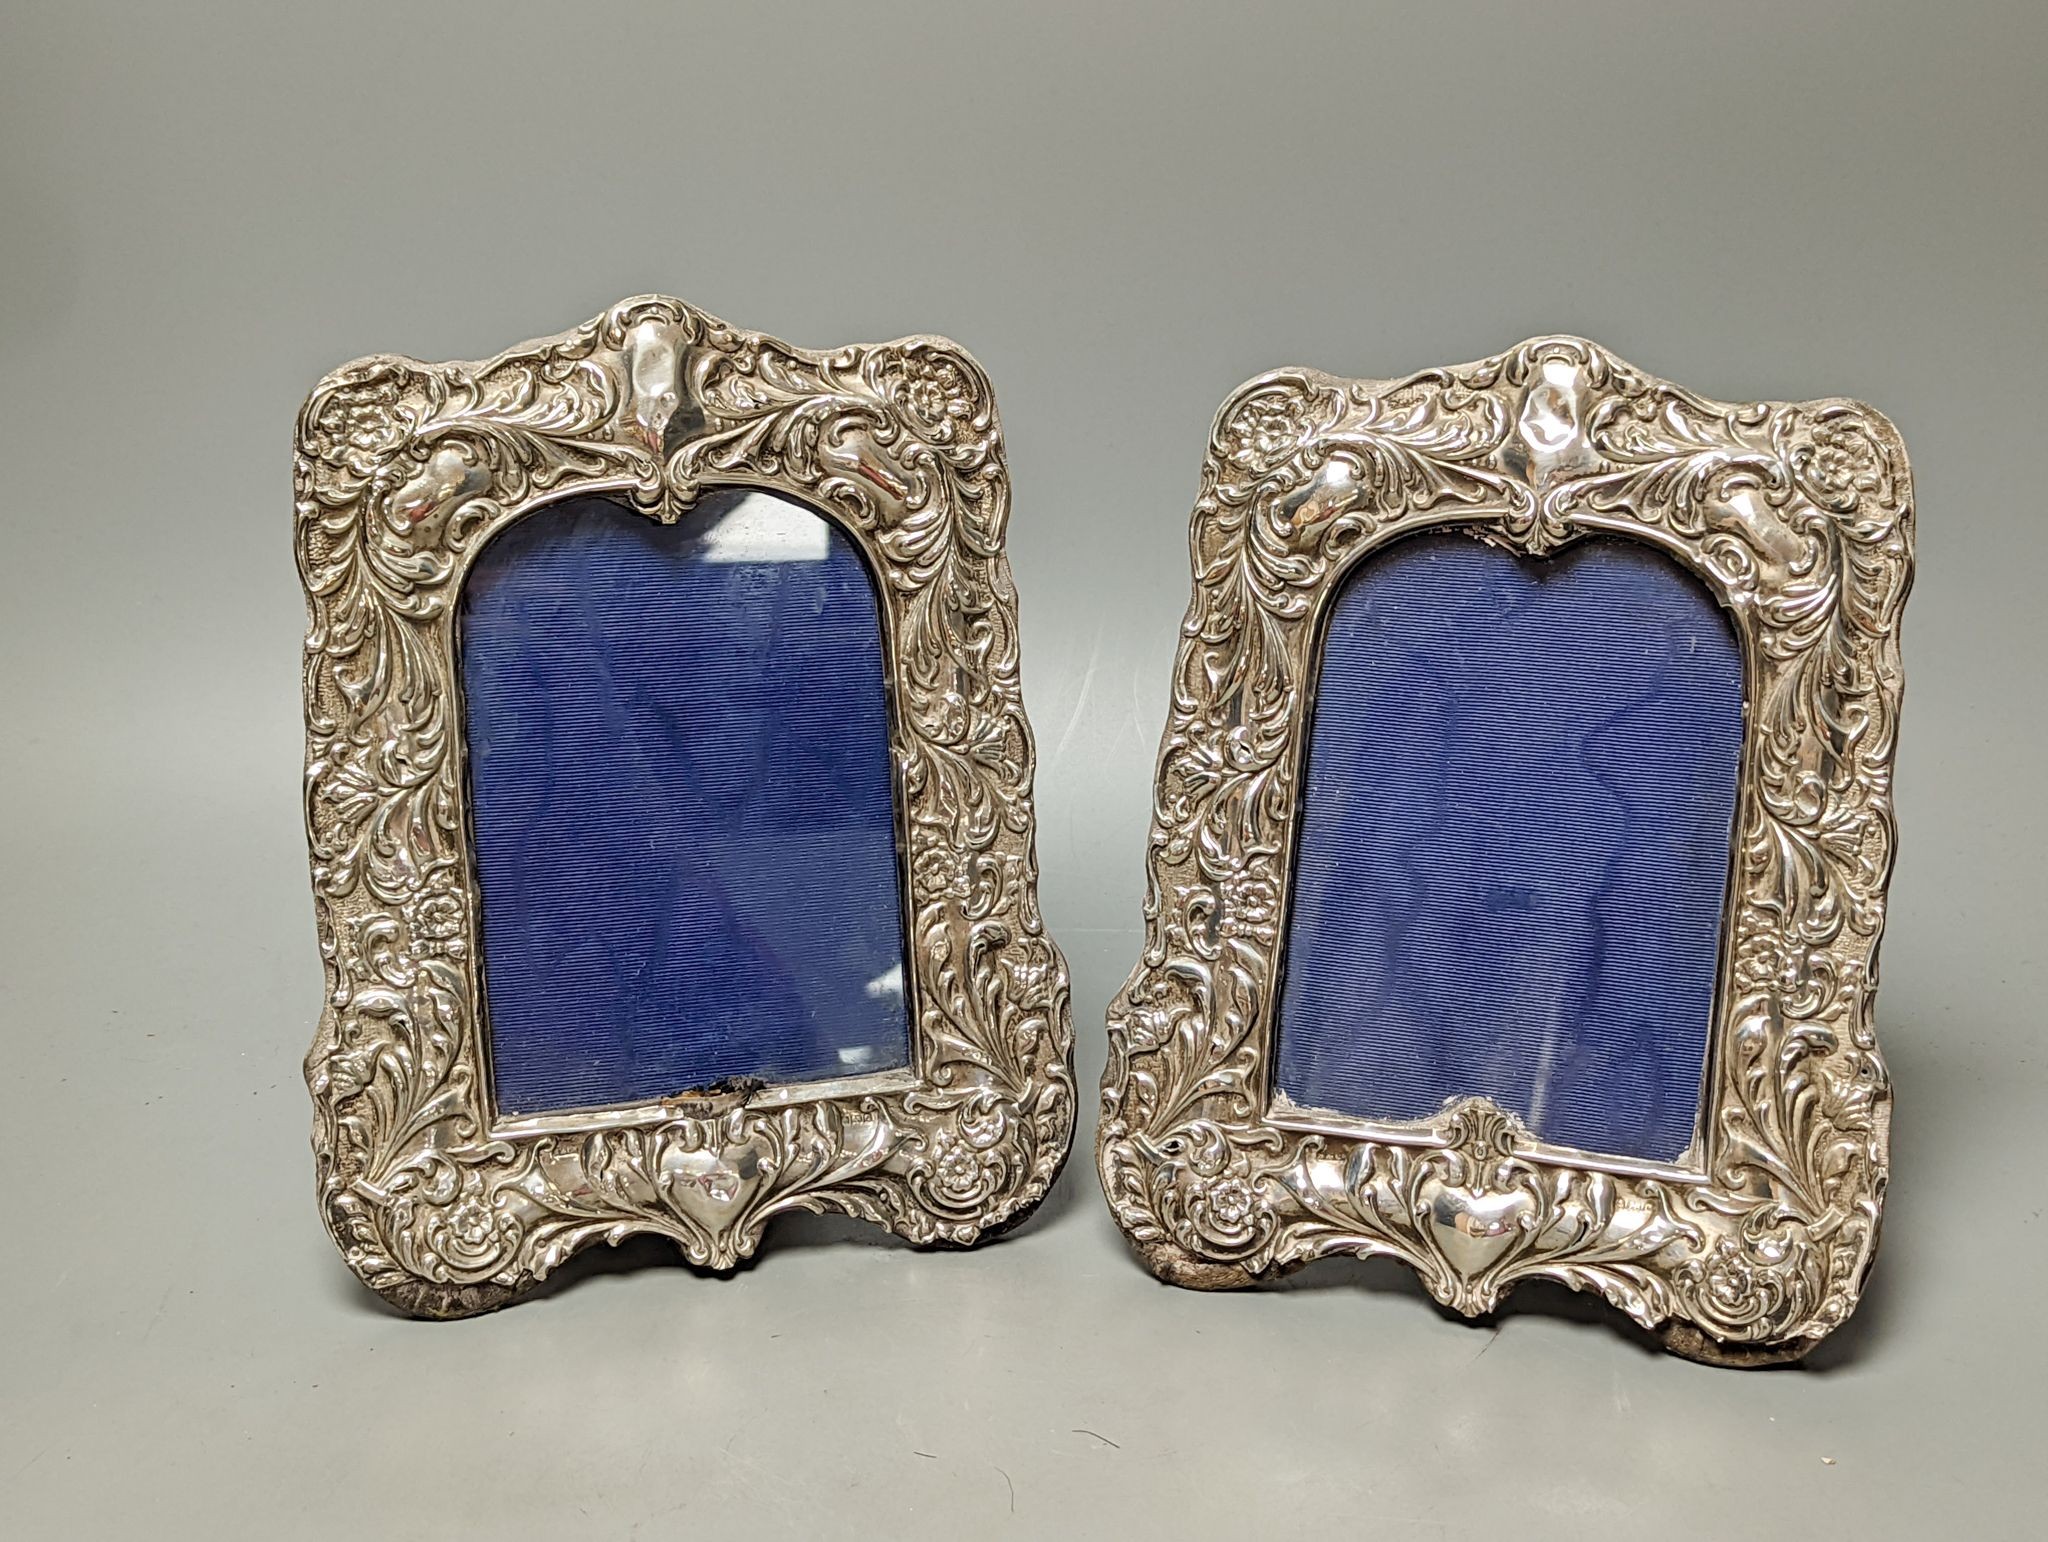 A pair of Edwardian repousse silver mounted photograph frames, Sydney & Co, Birmingham, 1902, 22.5cm (a.f.).